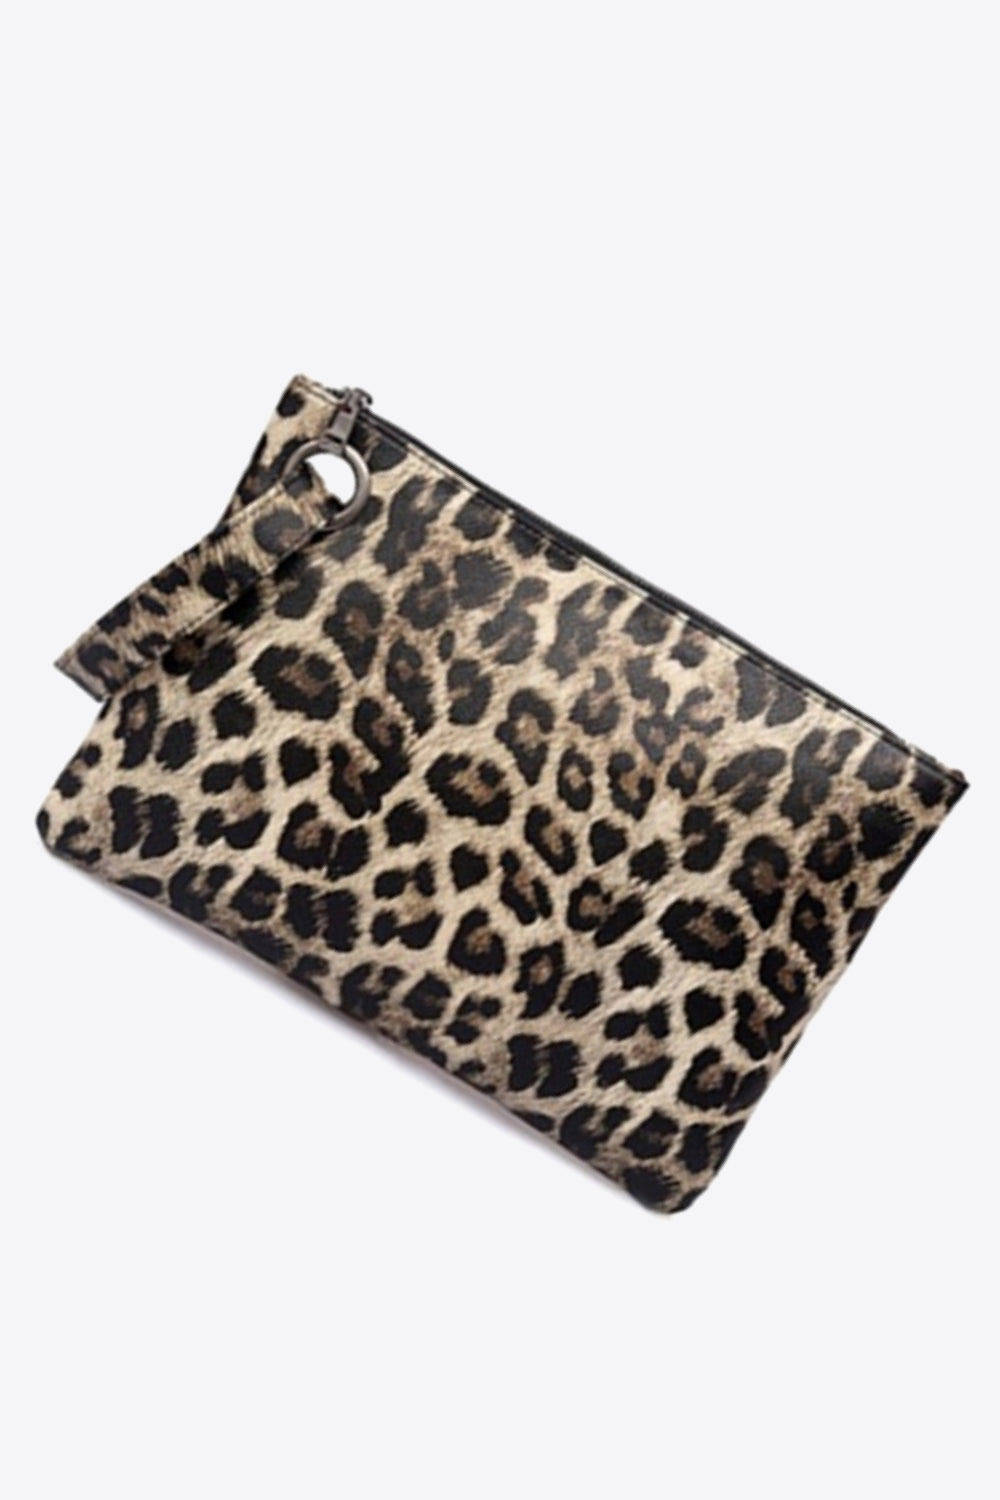 Leopard PU Leather Clutch - BEAUTY COSMOTICS SHOP